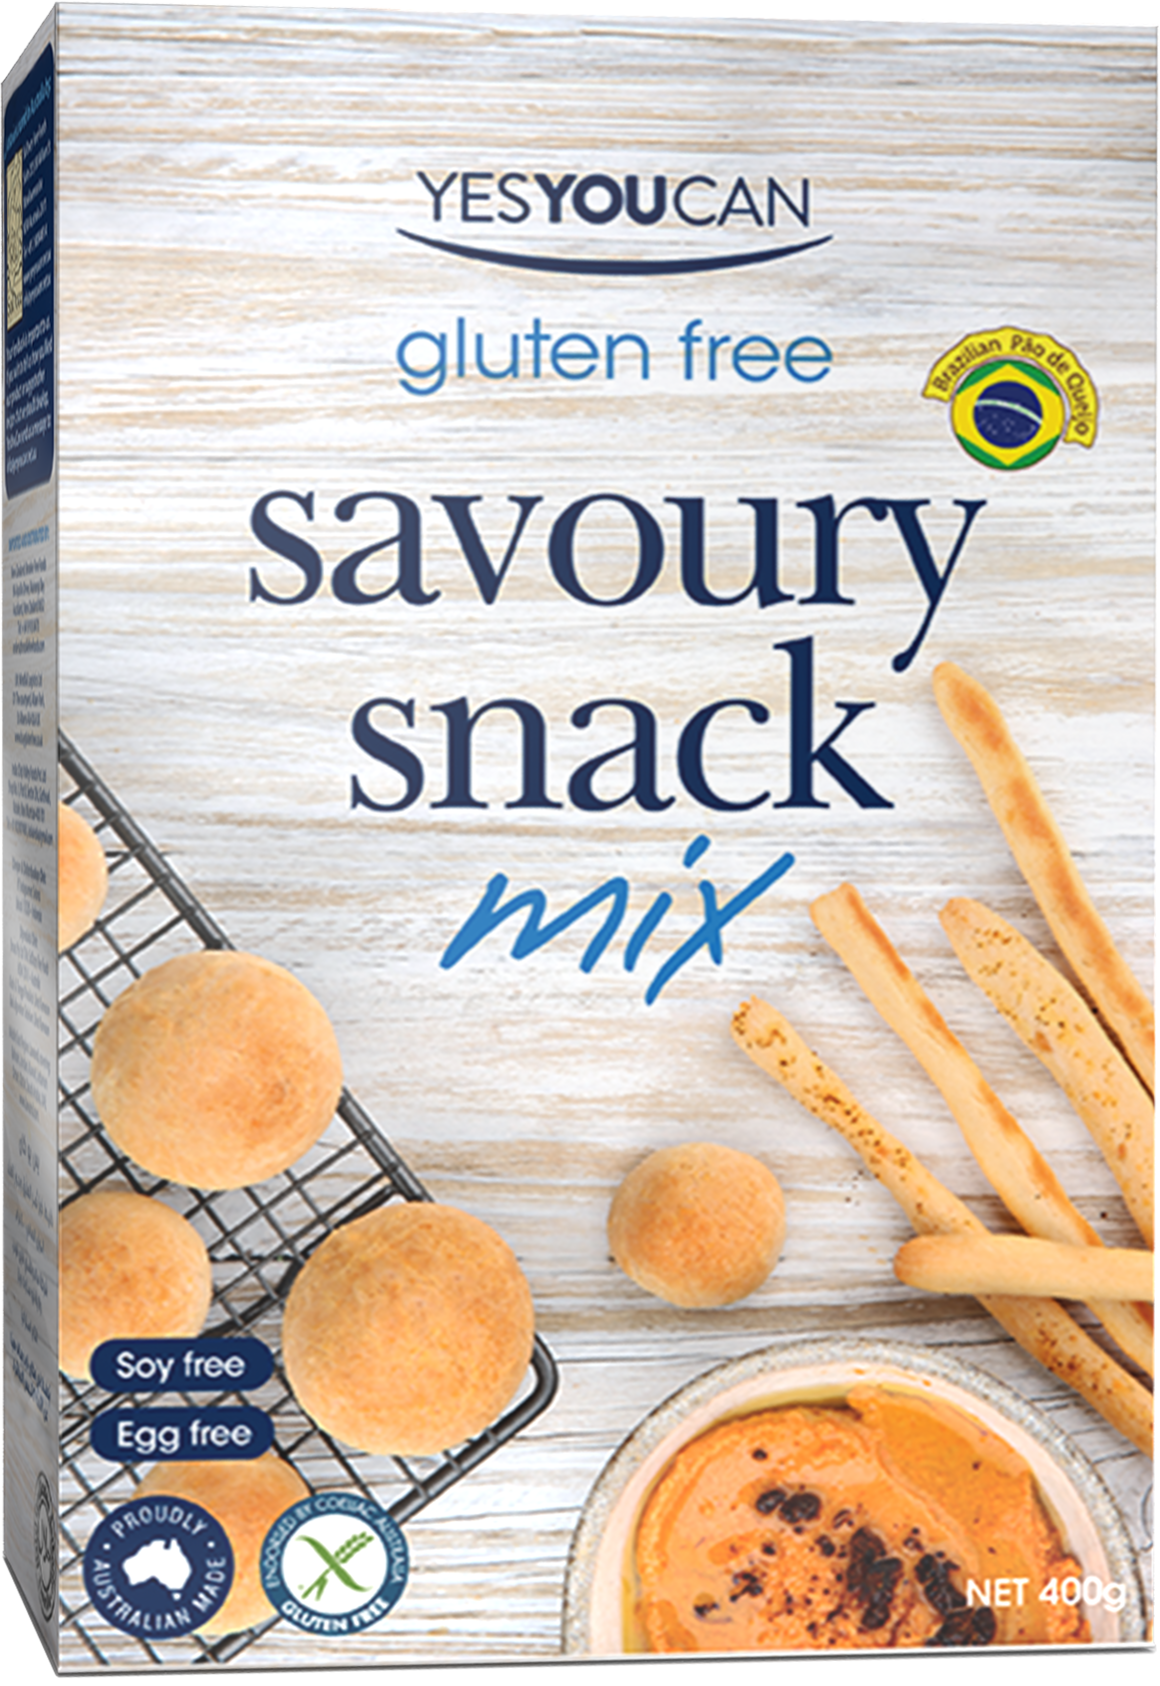 Savoury Snack Mix - P̣ao de Queijo